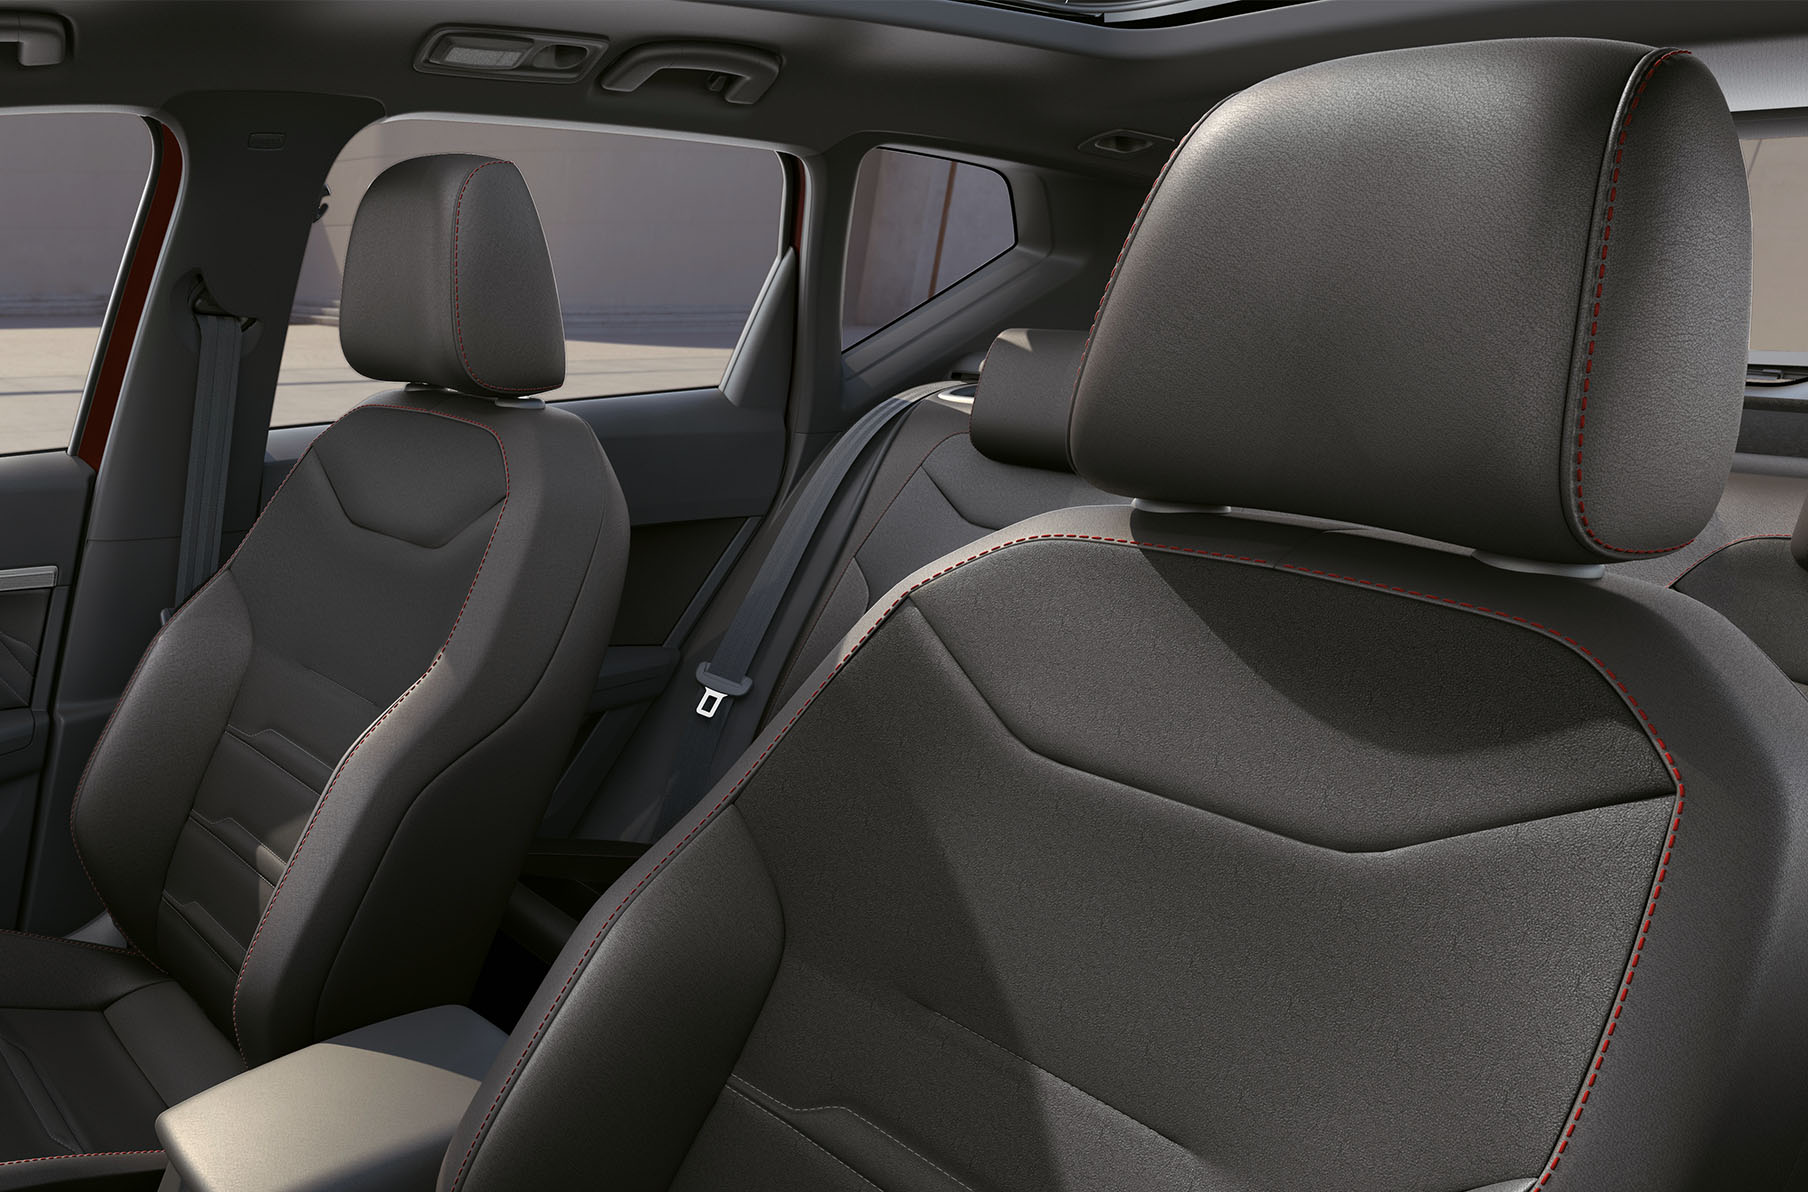 seat-ateca-interior-view-of-leather-seats